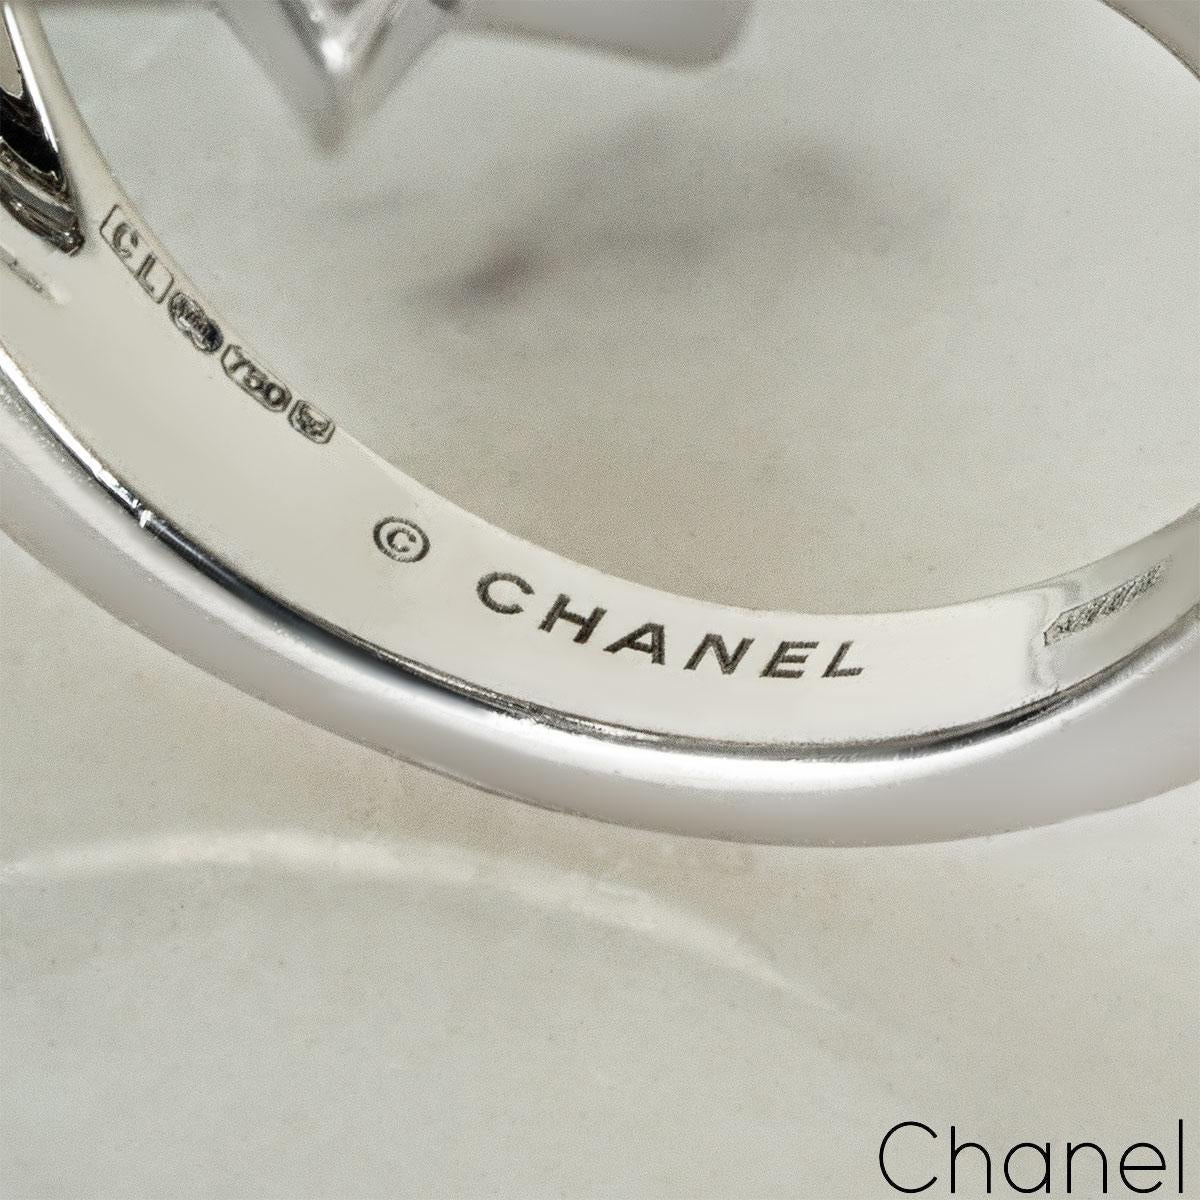 Chanel White Gold Diamond Comete Geode Ring J0387 For Sale 2